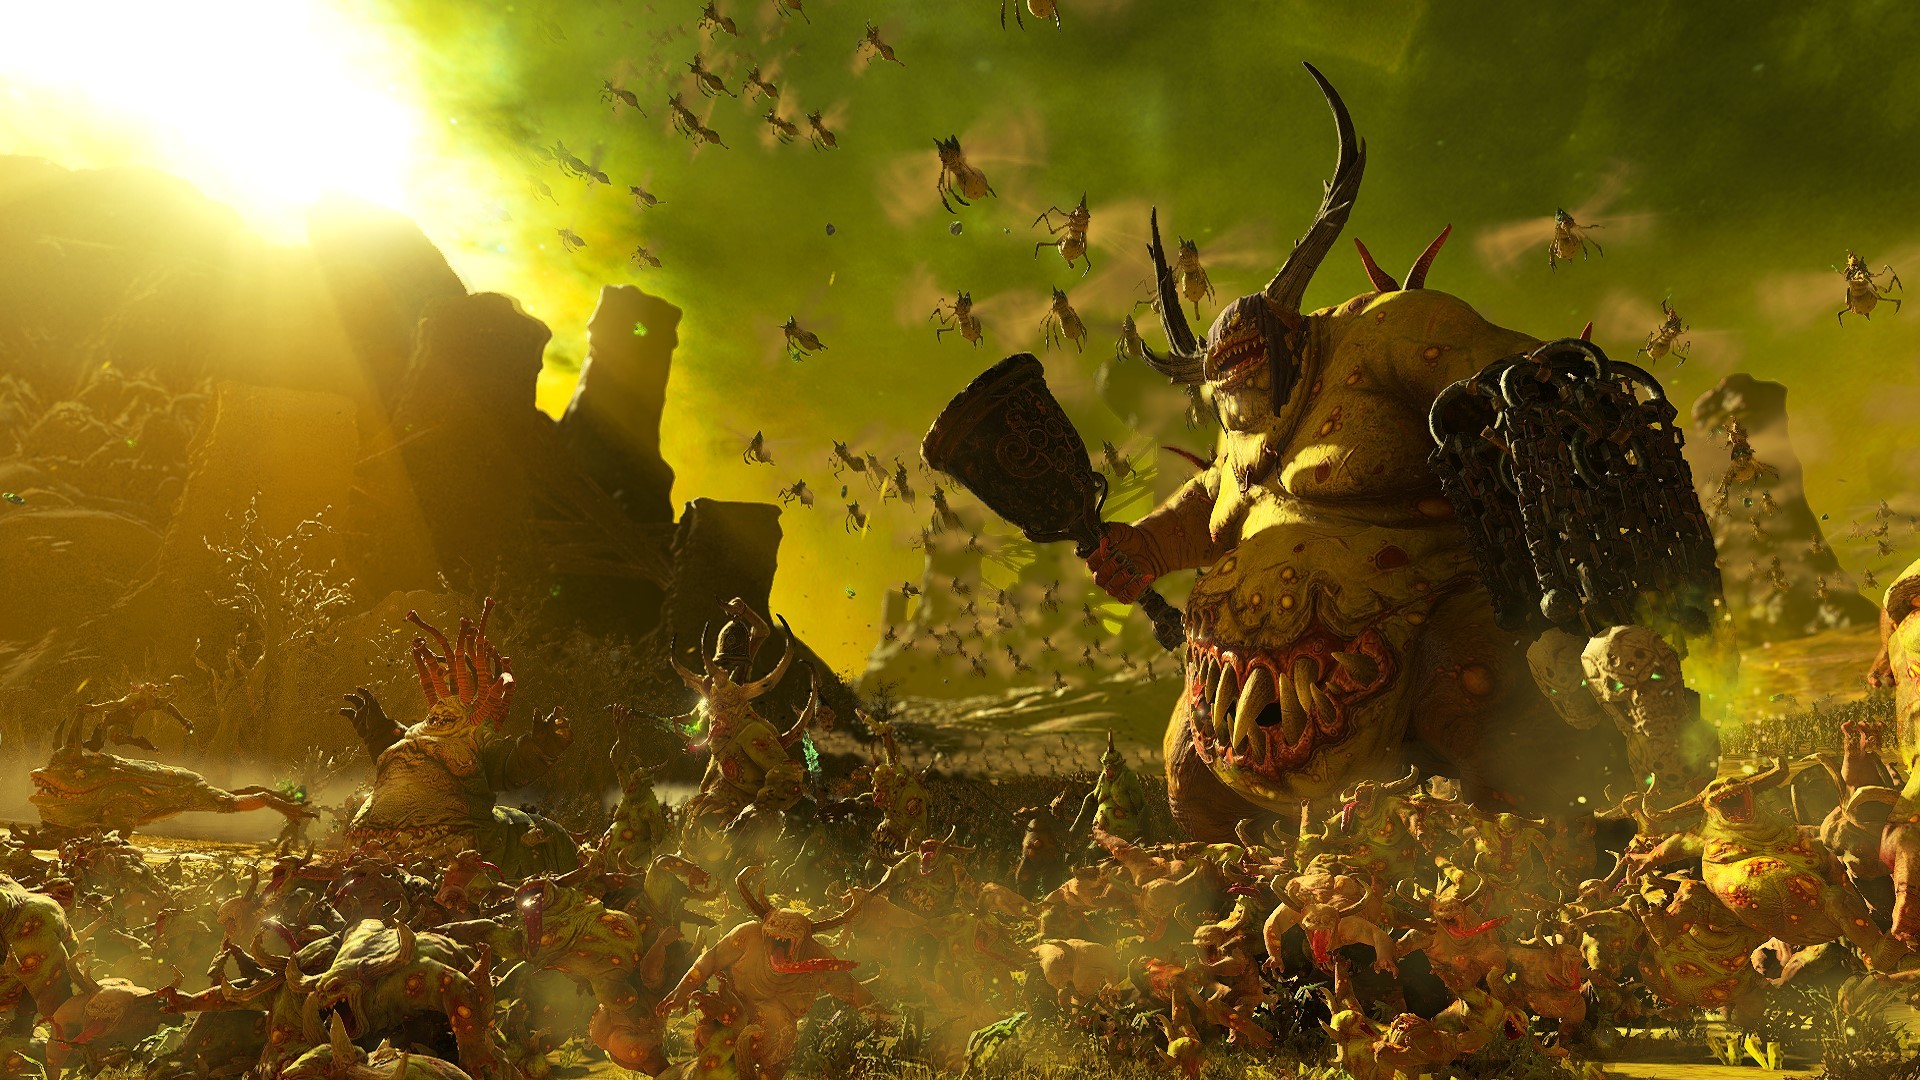 Total War: Warhammer III gets new trailer showcasing endgame scenarios